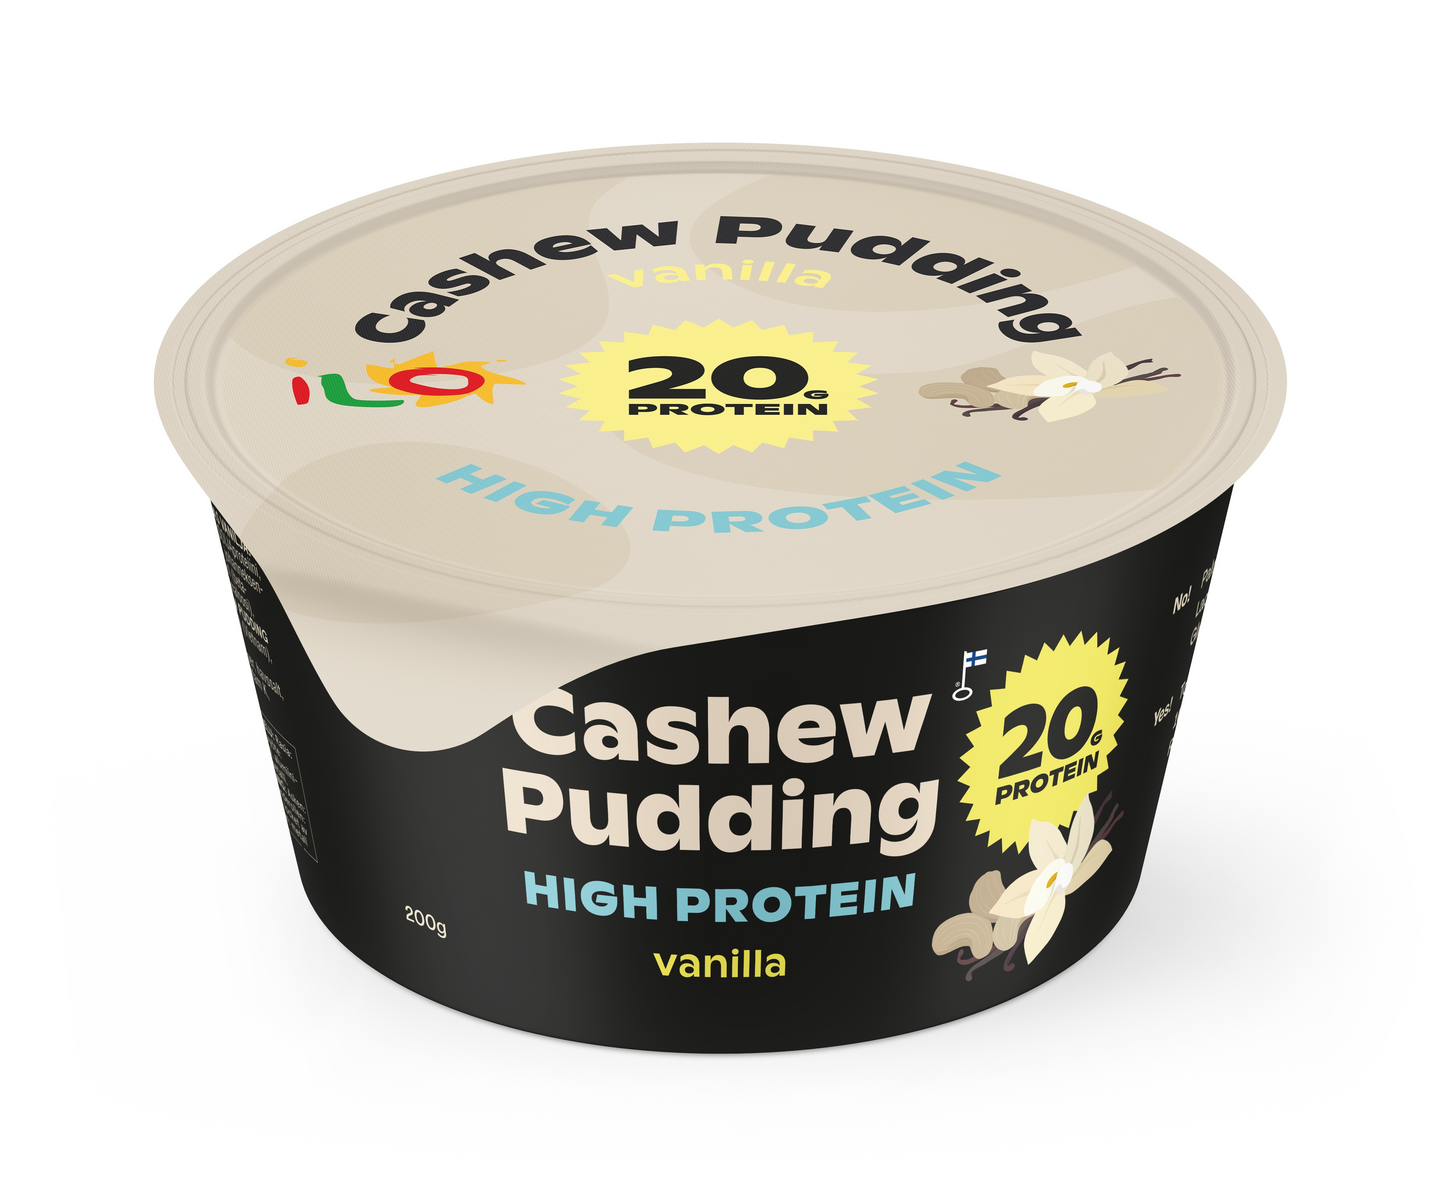 Ilo Cashew pudding high protein vanilla 200g